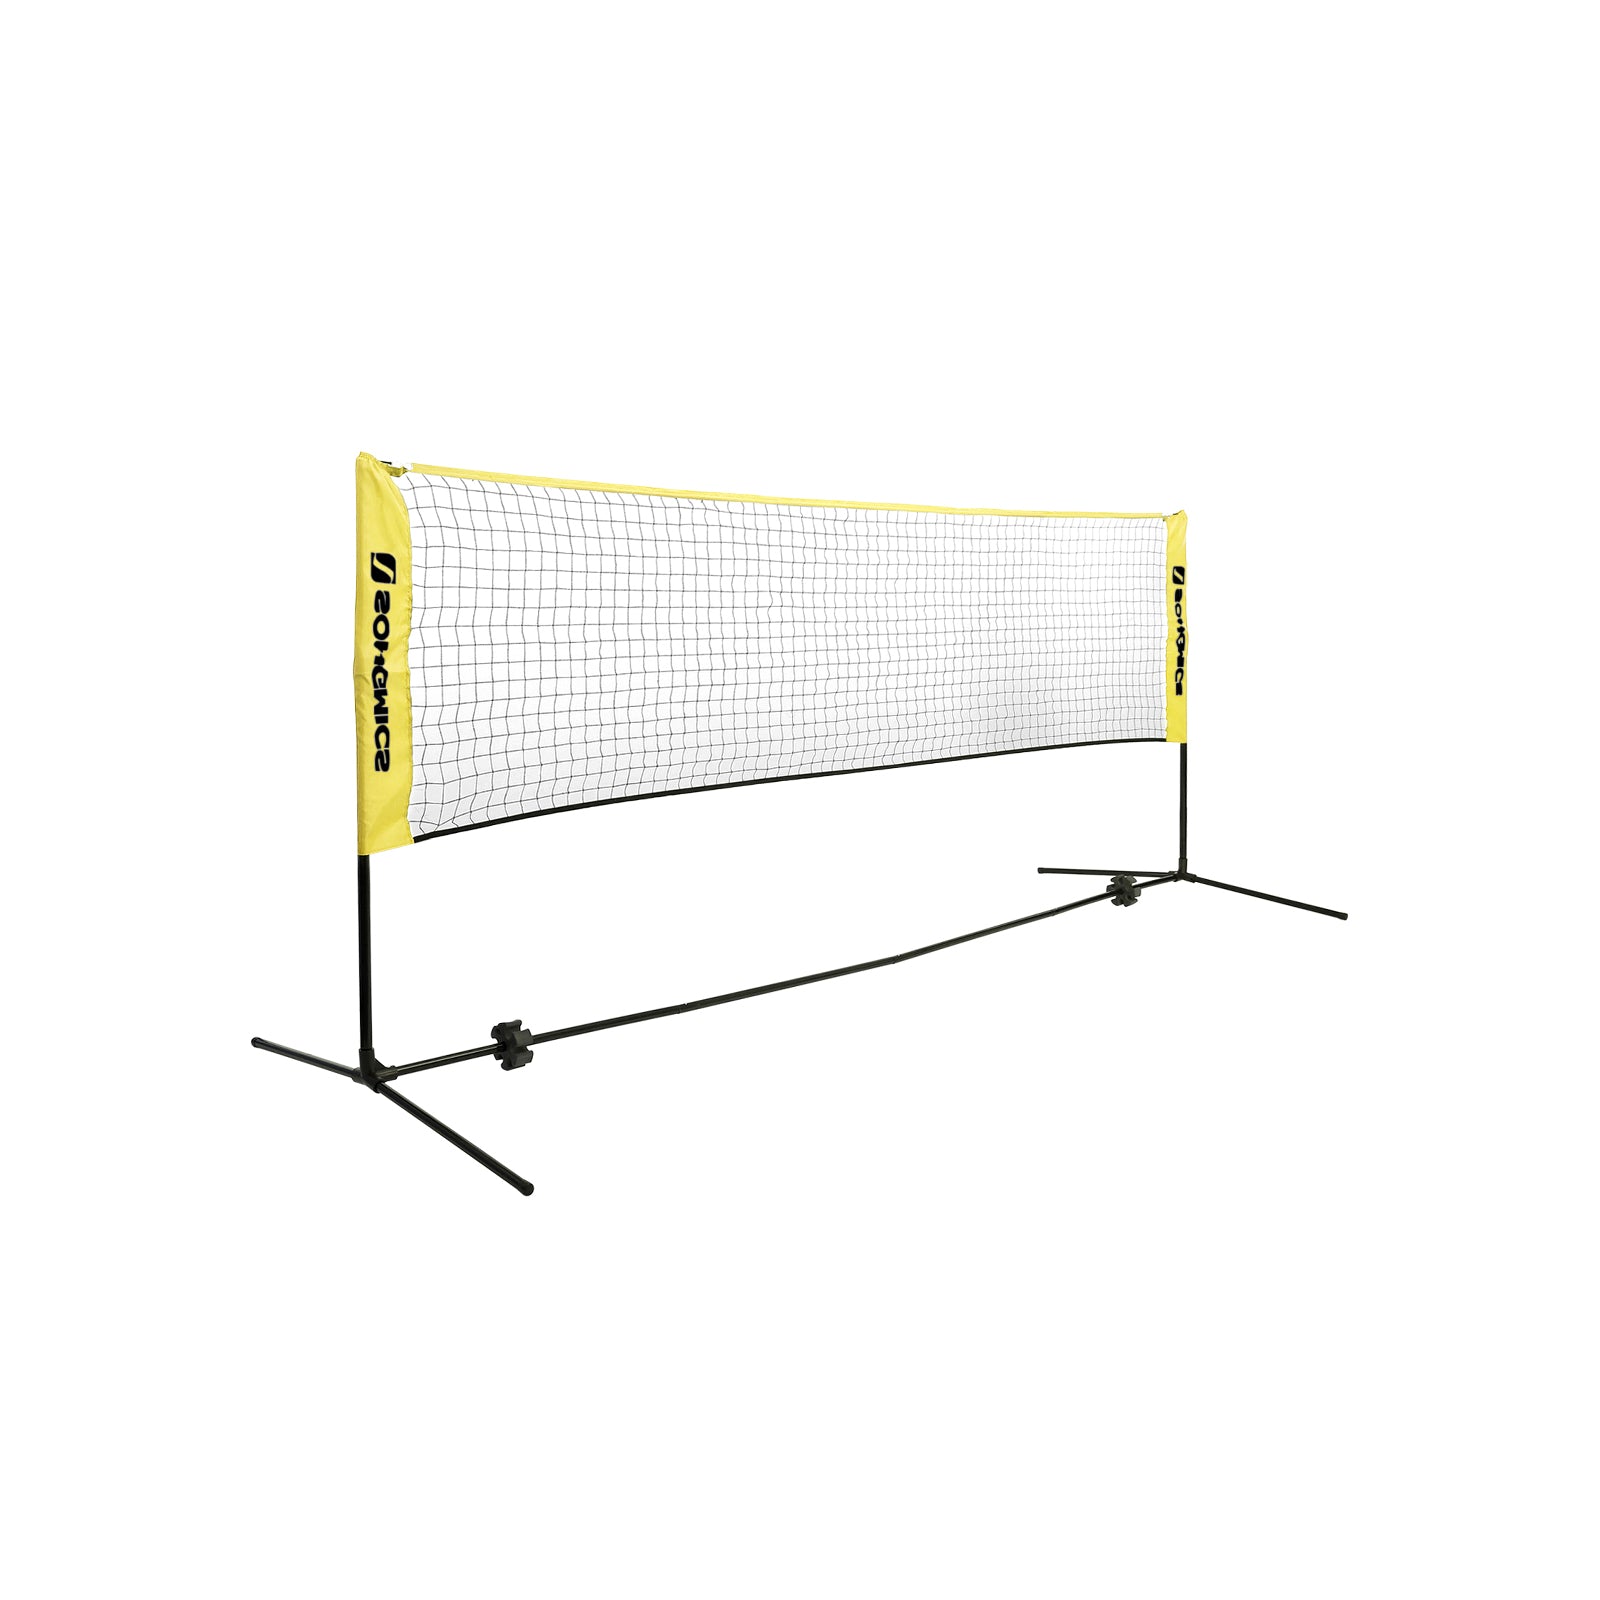 950 x100cm rete da pallavolo portatile da Badminton Indoor o